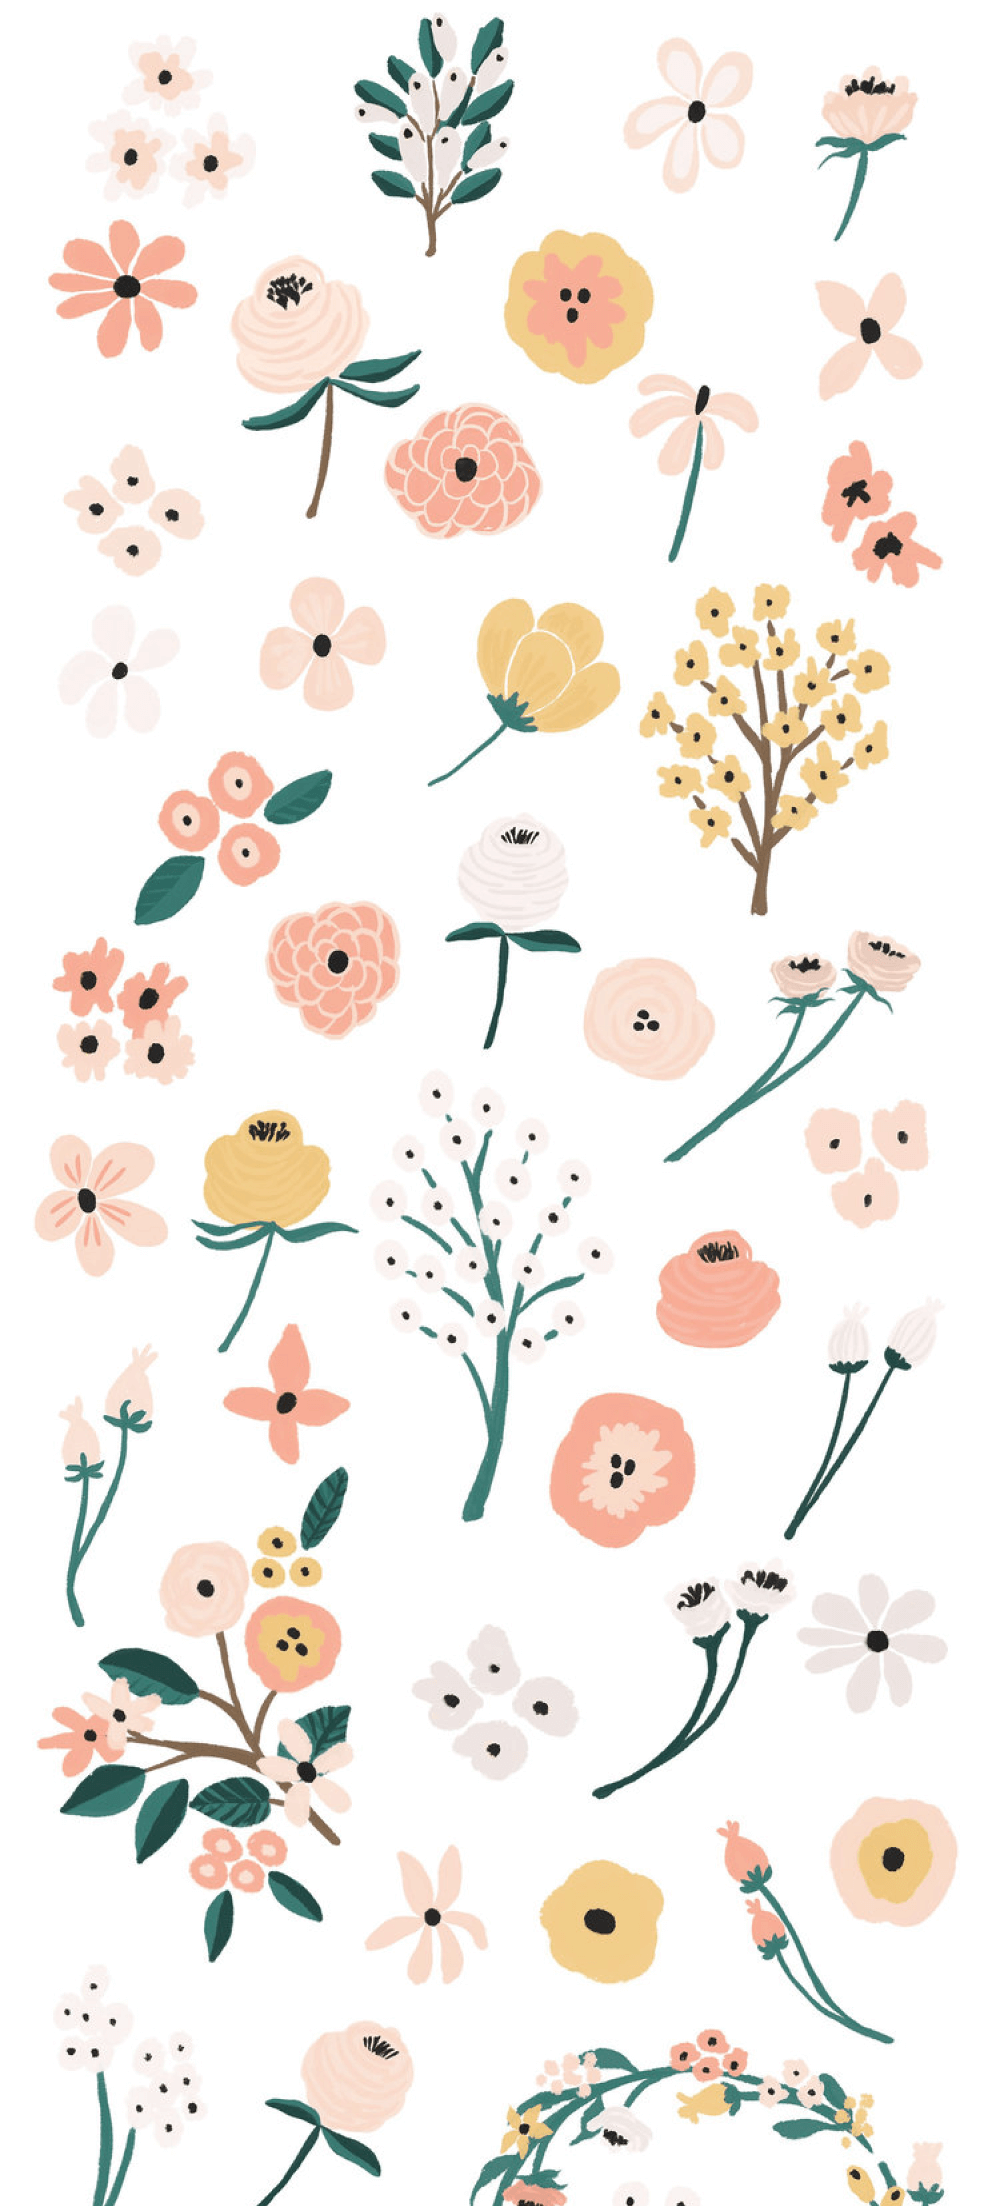 Lillia - Free Floral Illustration Sample - Pixel Surplus